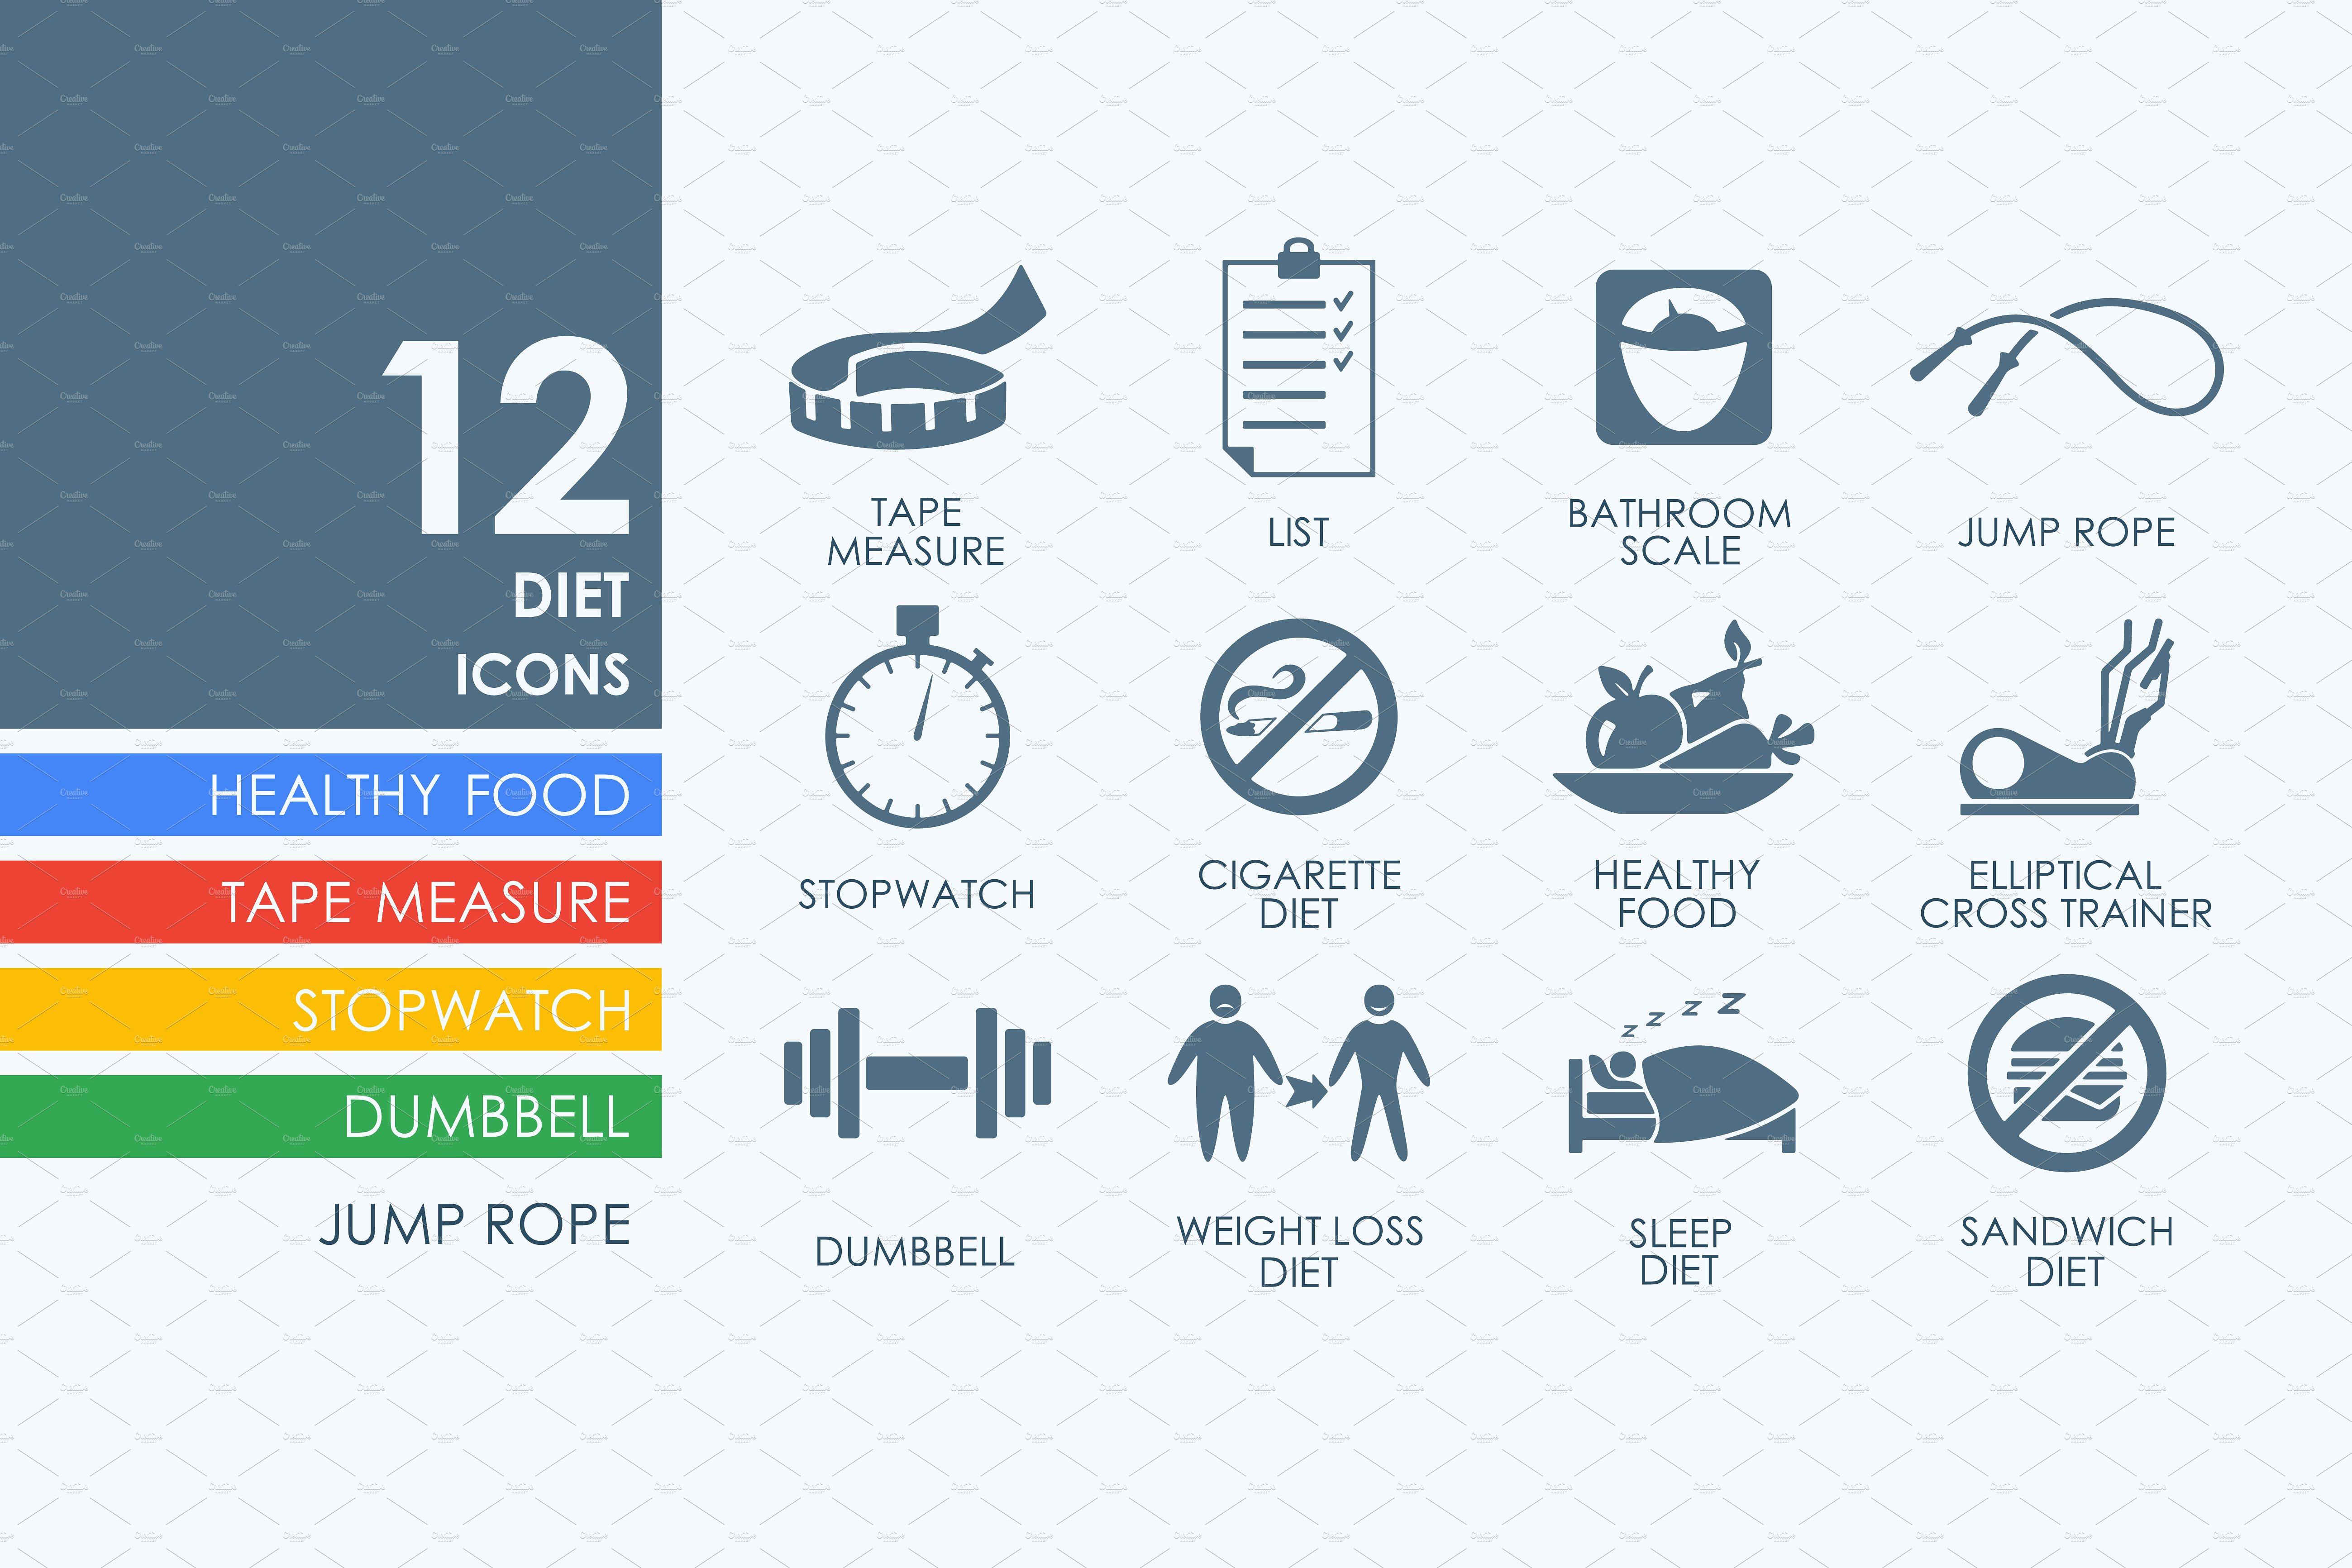 饮食图标 12 diet icons #91220